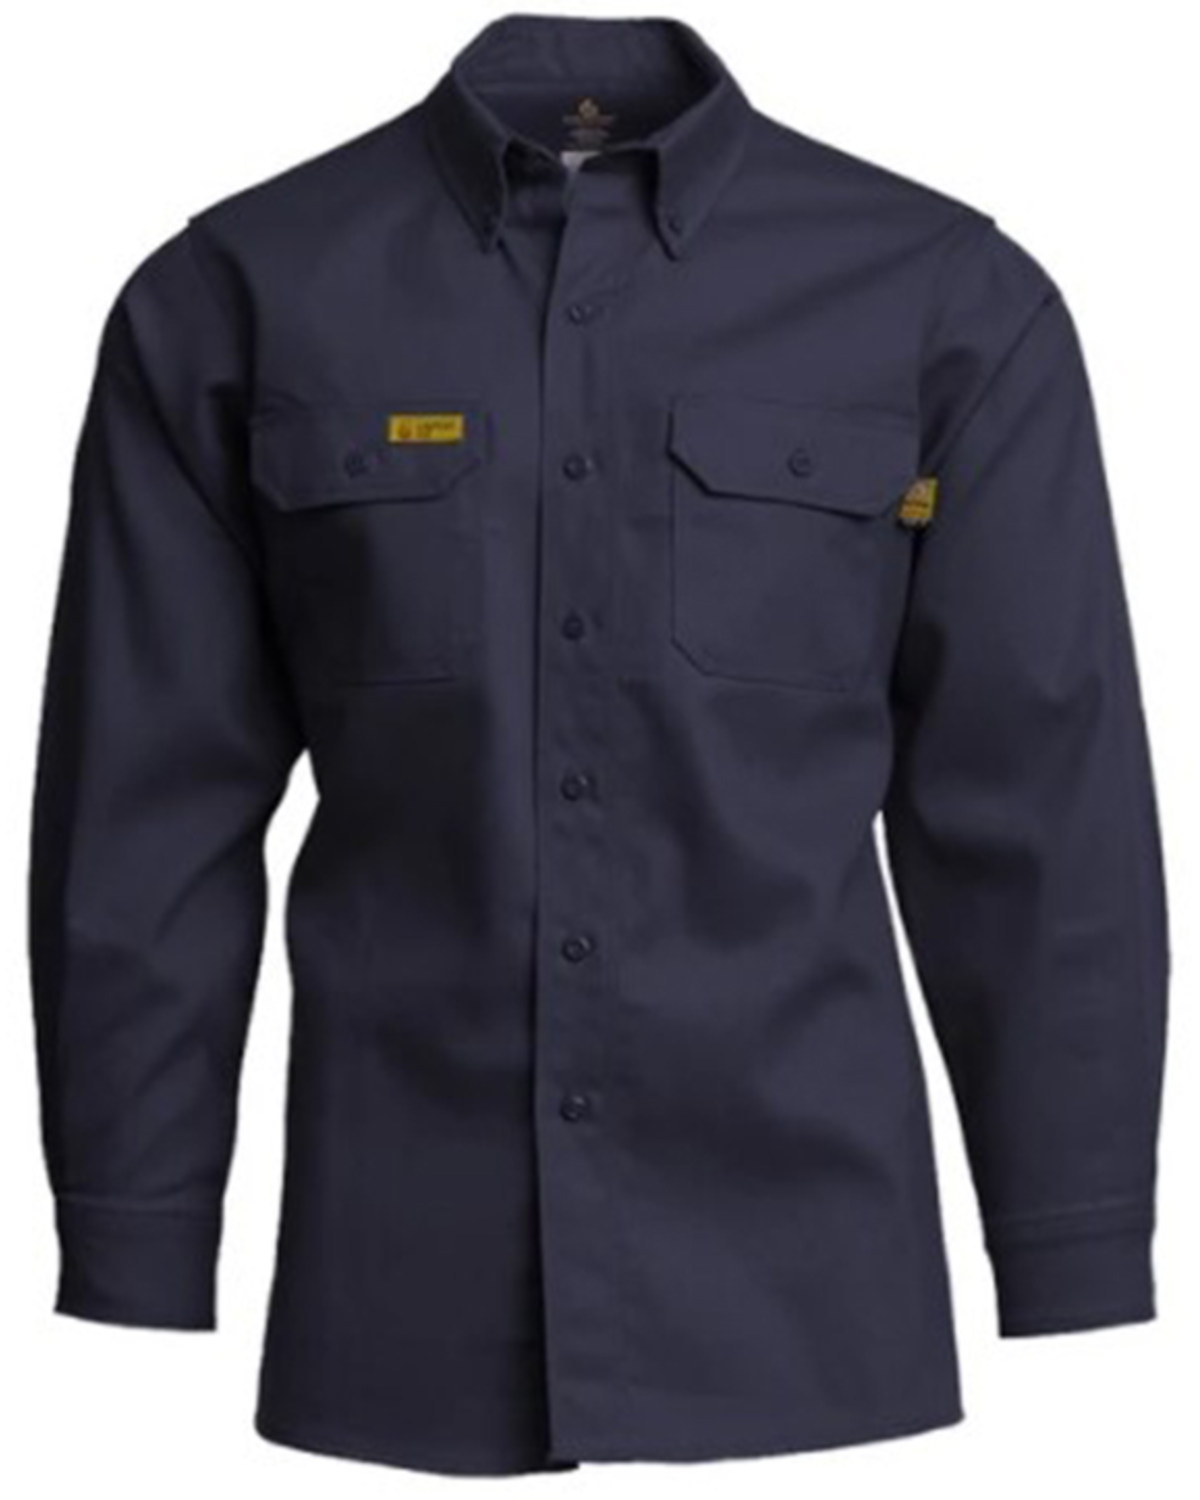 Lapco Men's FR Solid Navy Gold Label Long Sleeve Button Down Uniform Work Shirt